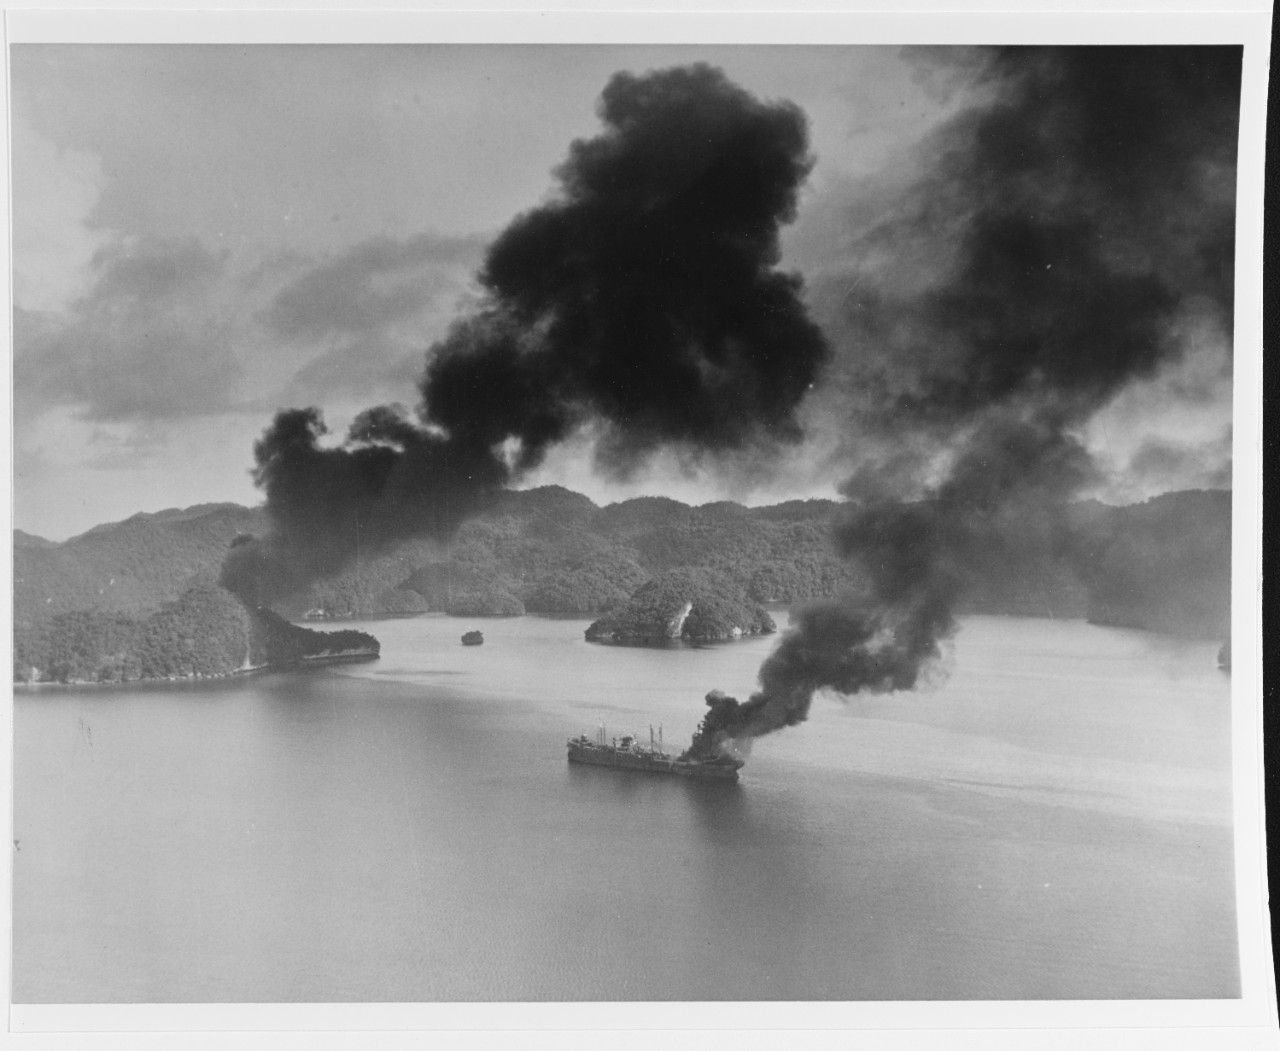 Carrier raid on the Palau Islands, March 1944